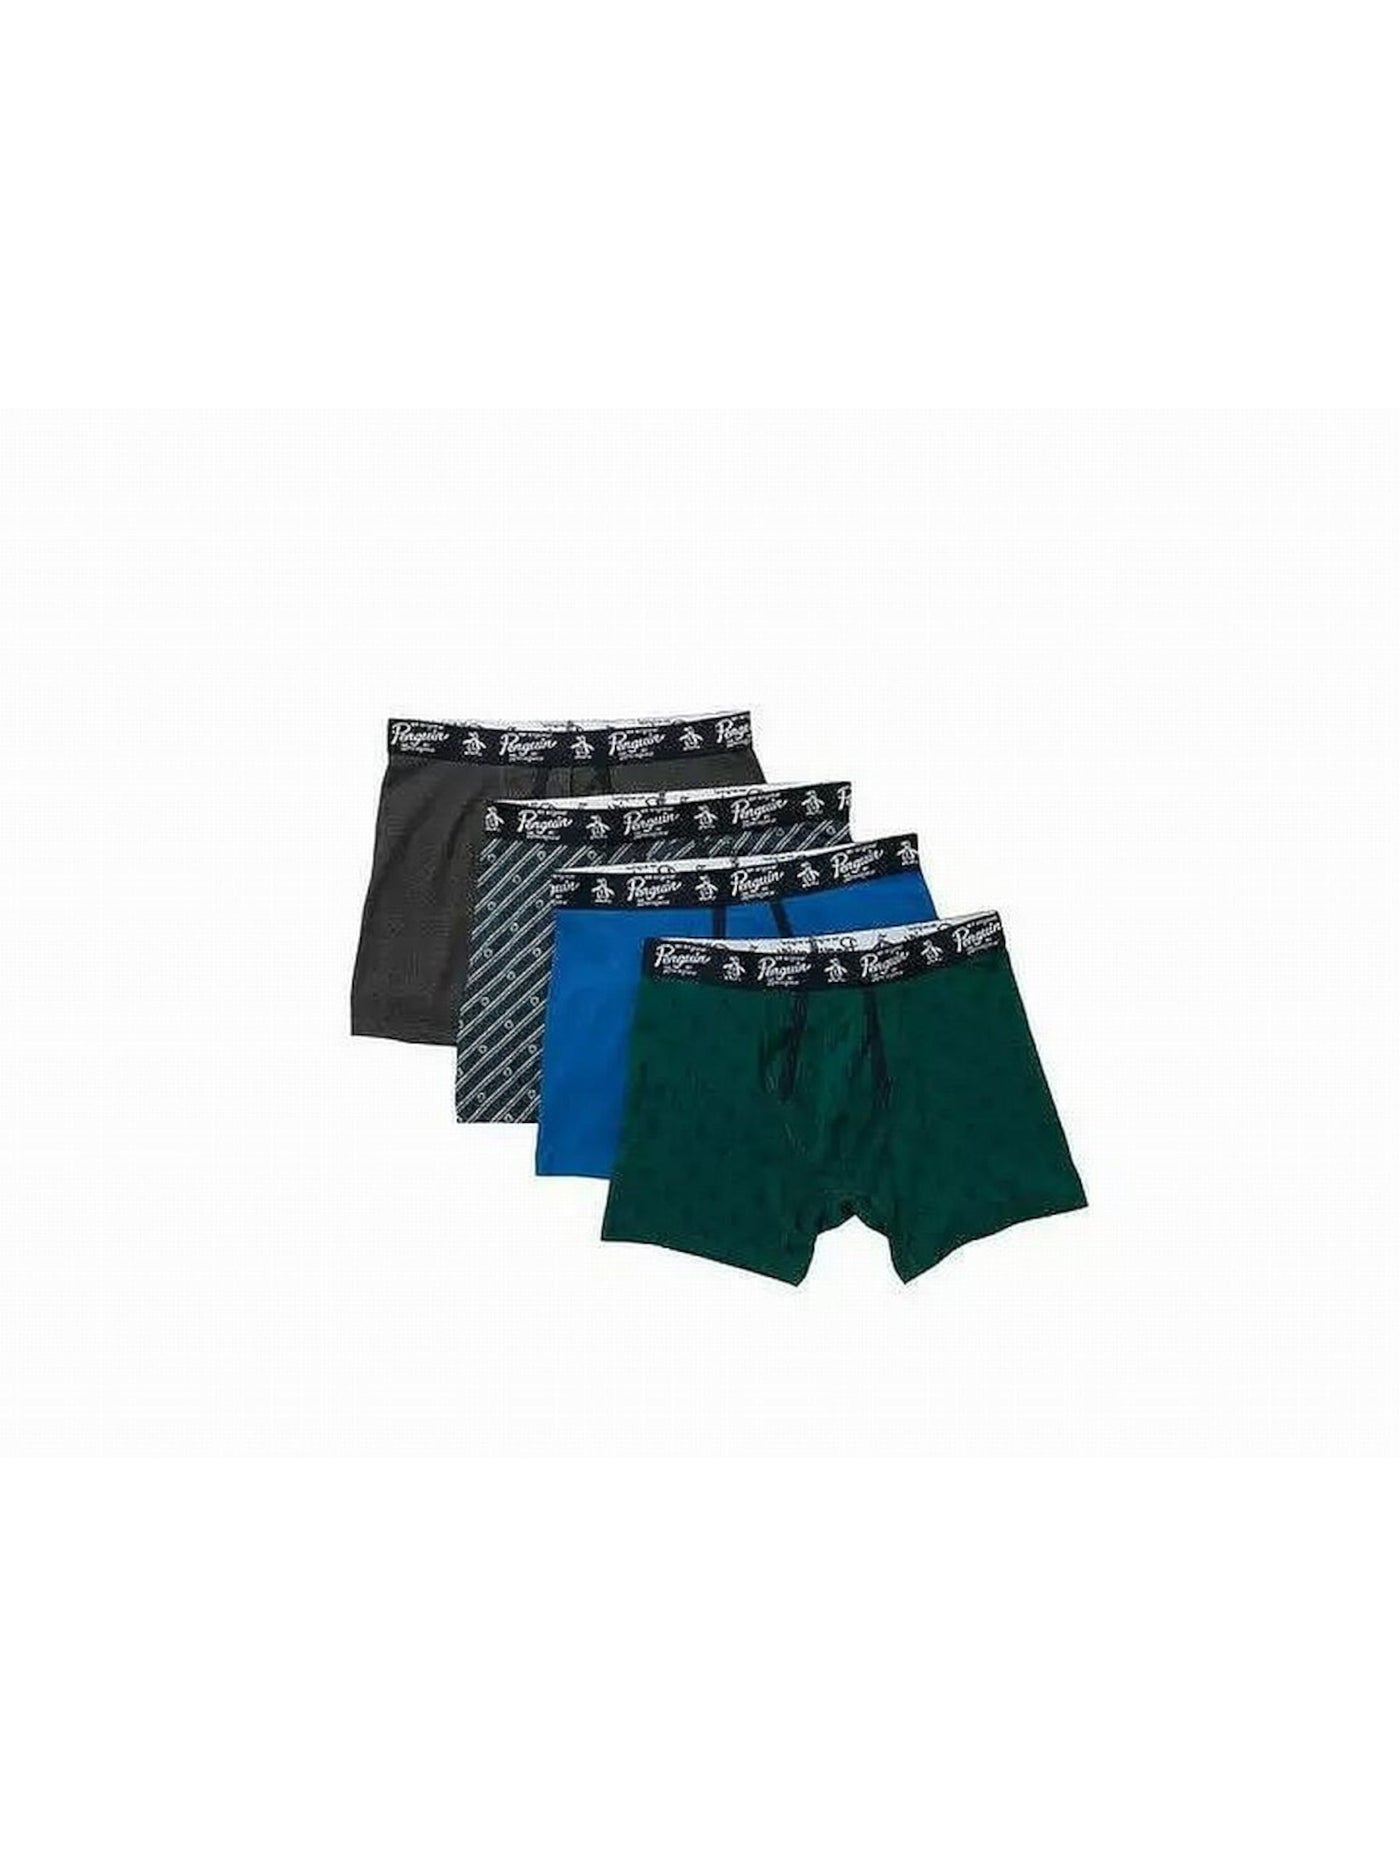 PENGUIN Intimates 4 Pack Green Trunk Underwear XL